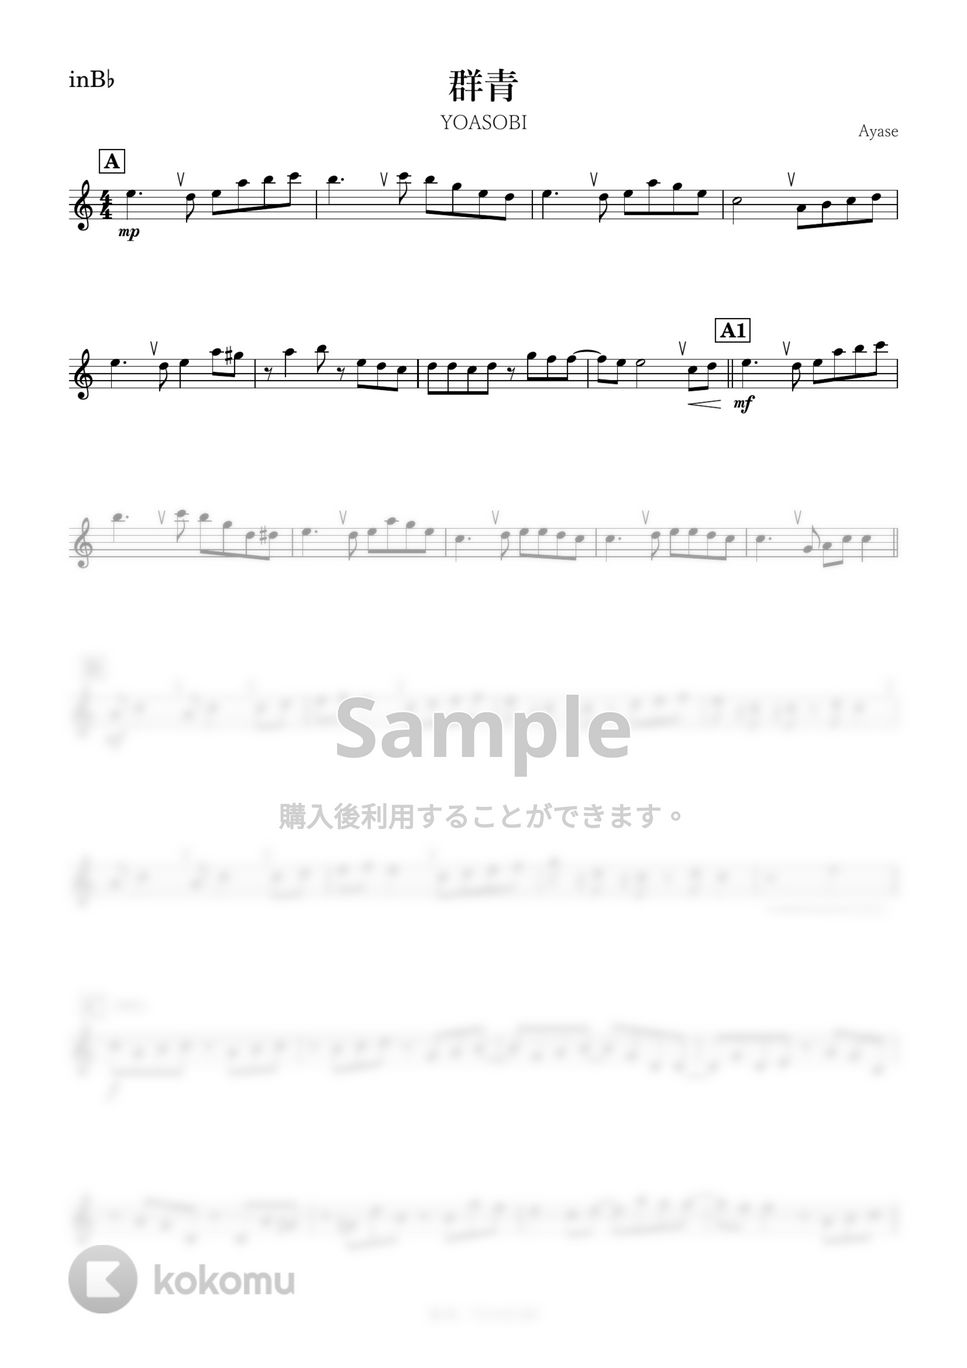 YOASOBI - 群青 (B♭) by kanamusic